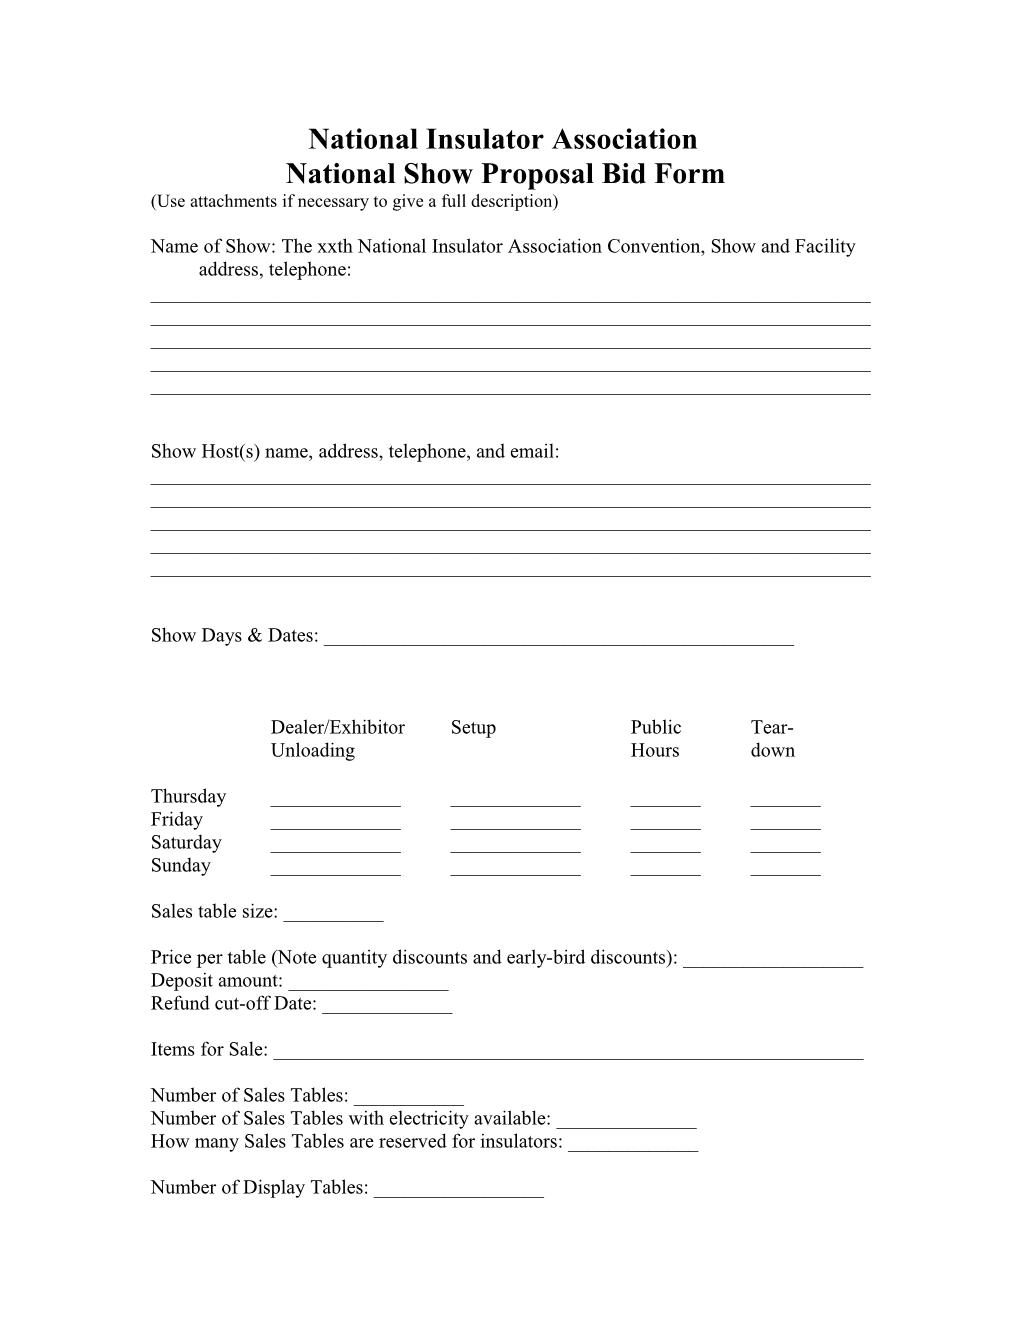 National Insulator Association - Regional Show Proposal Bid Form